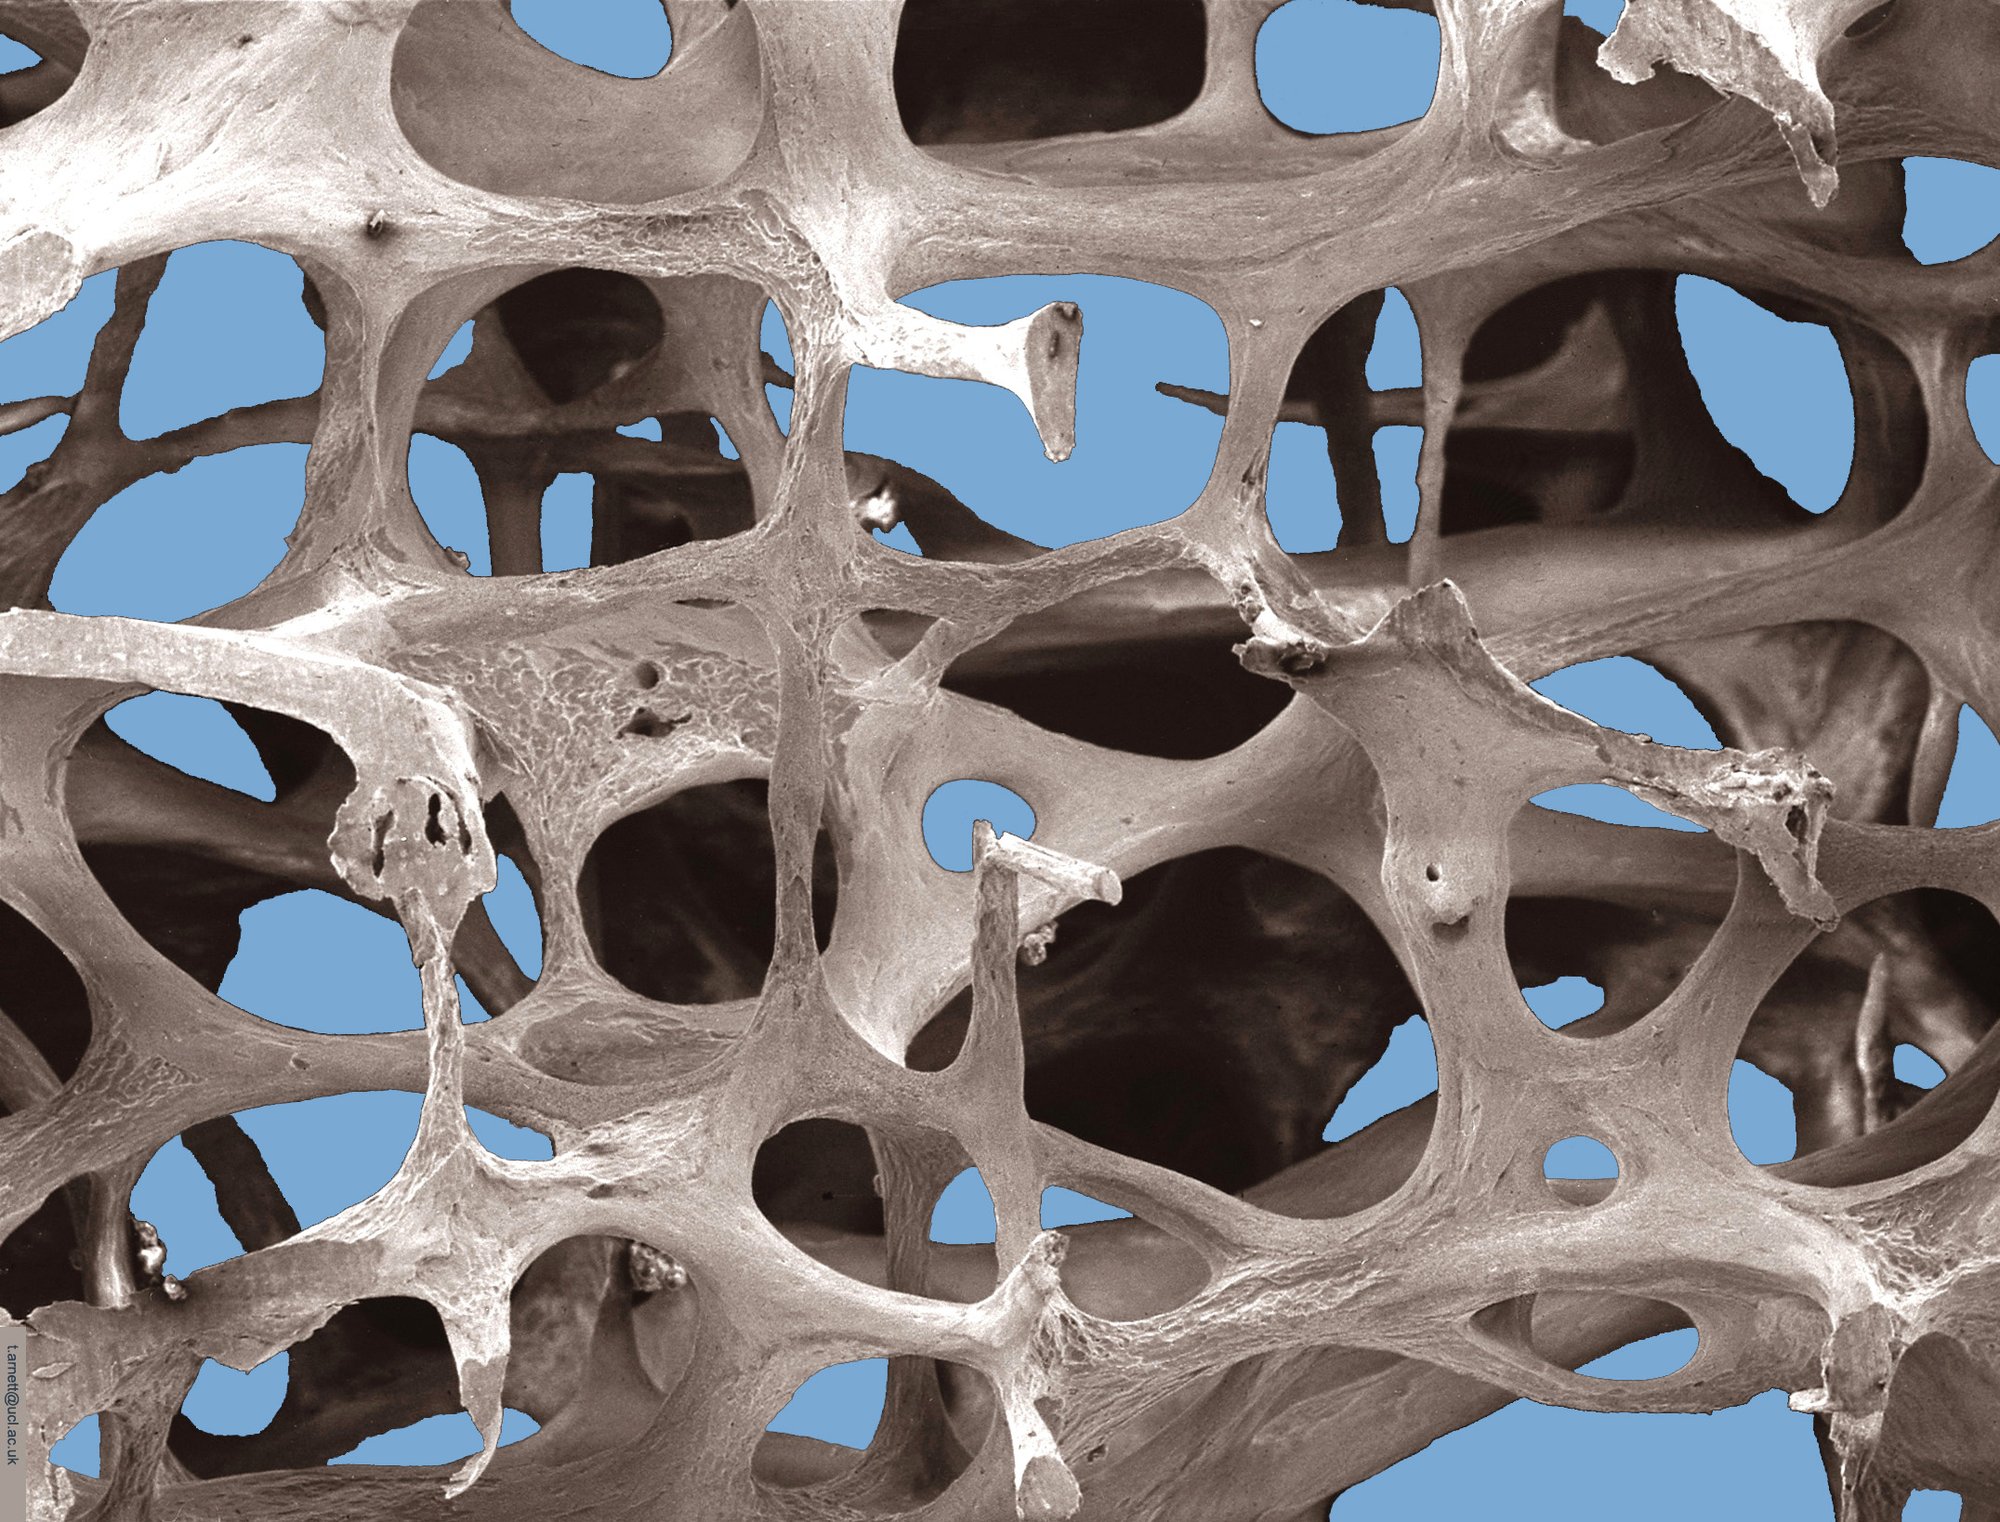 Scanning Electron Microscopy of osteoporotic bone